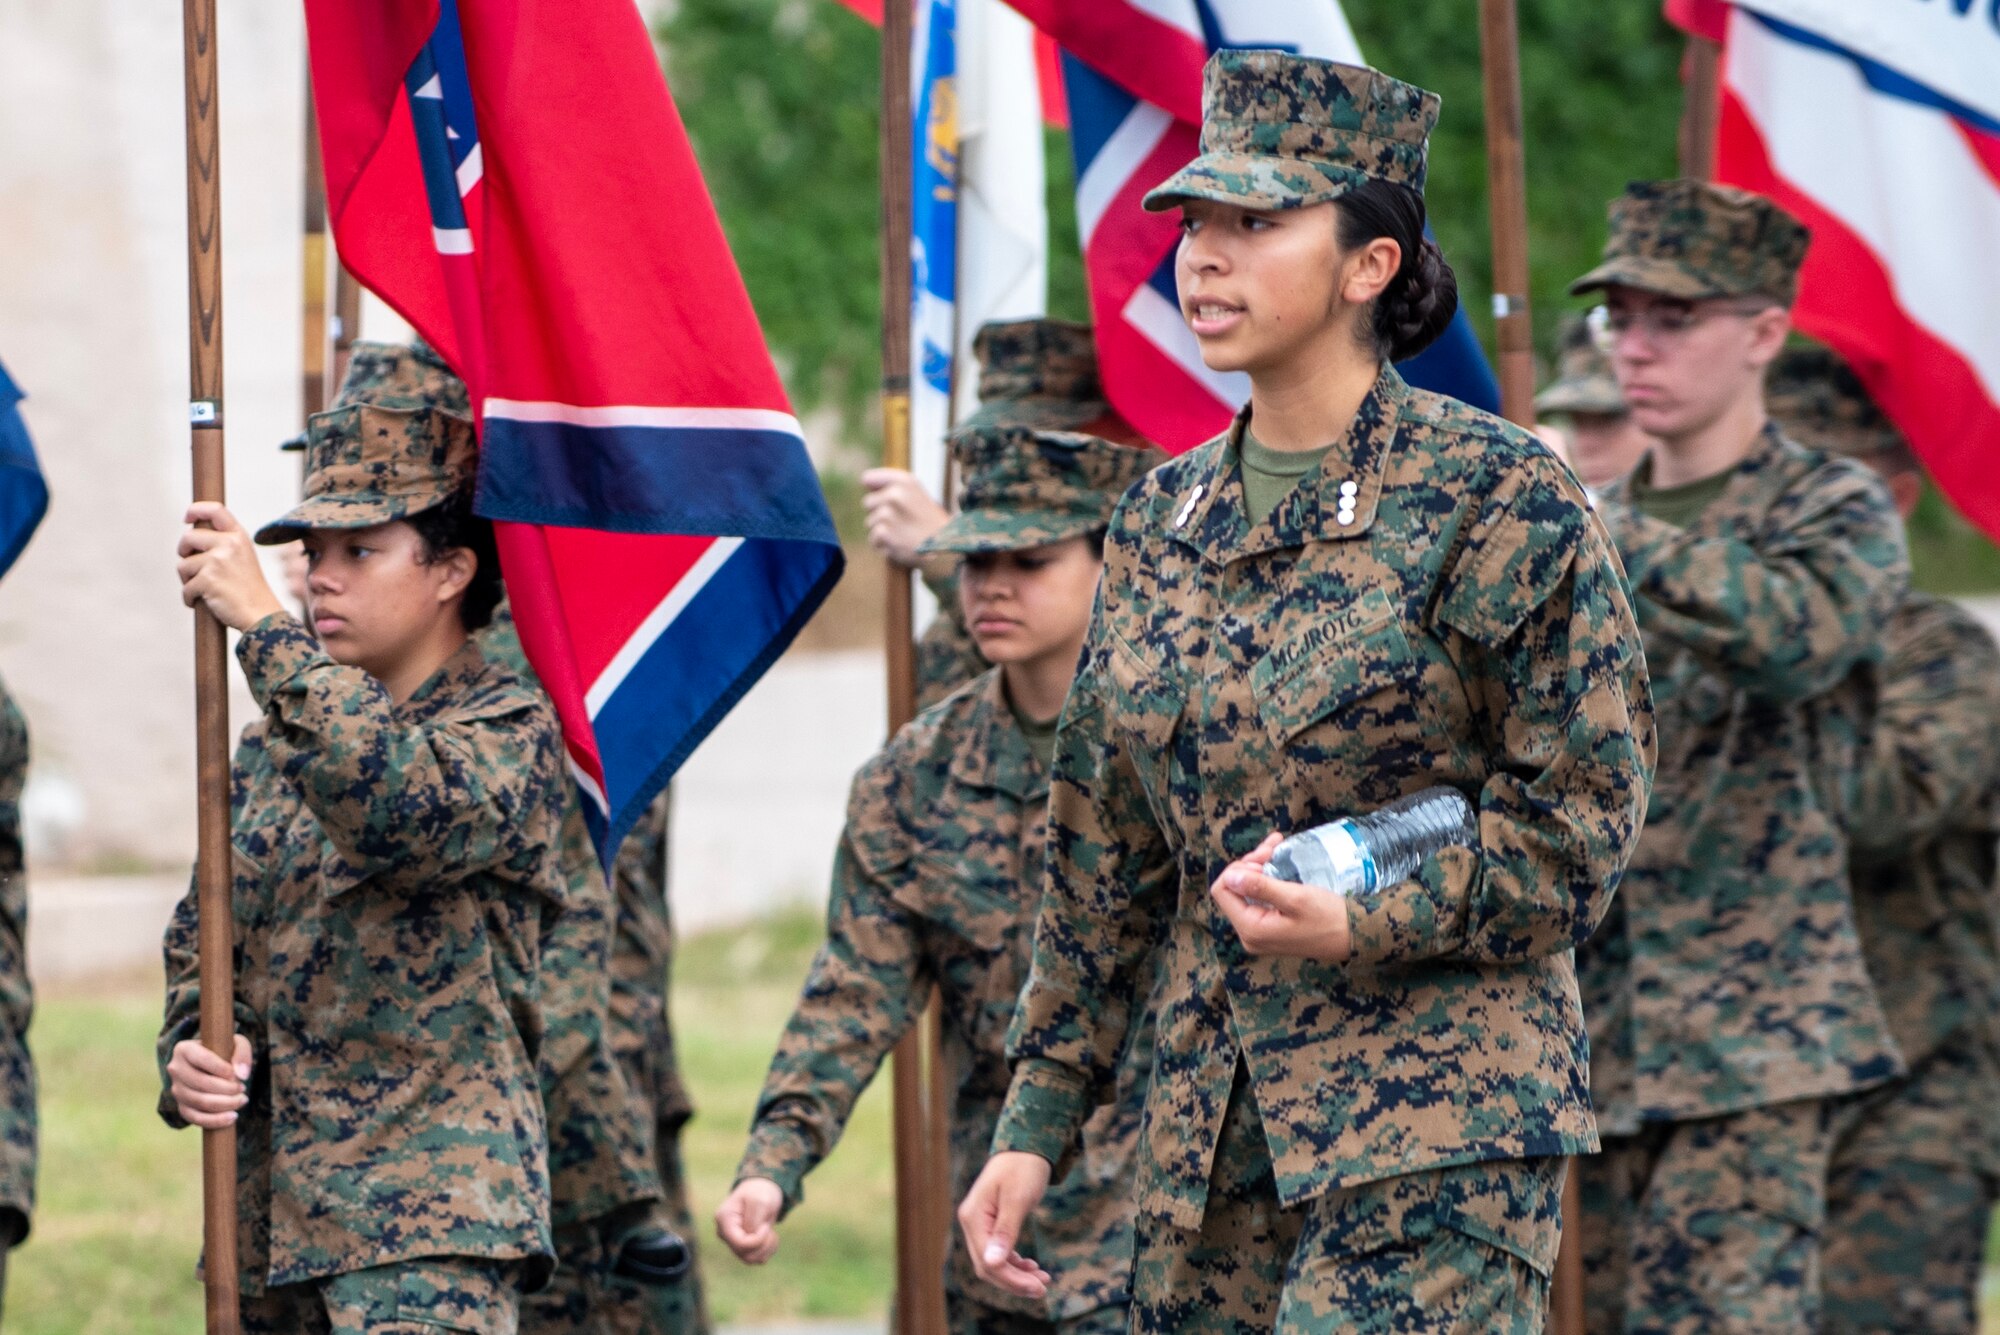 Kubasaki Marine Corps JROTC members march as a part of Kadena Air Base's Veterans day parade